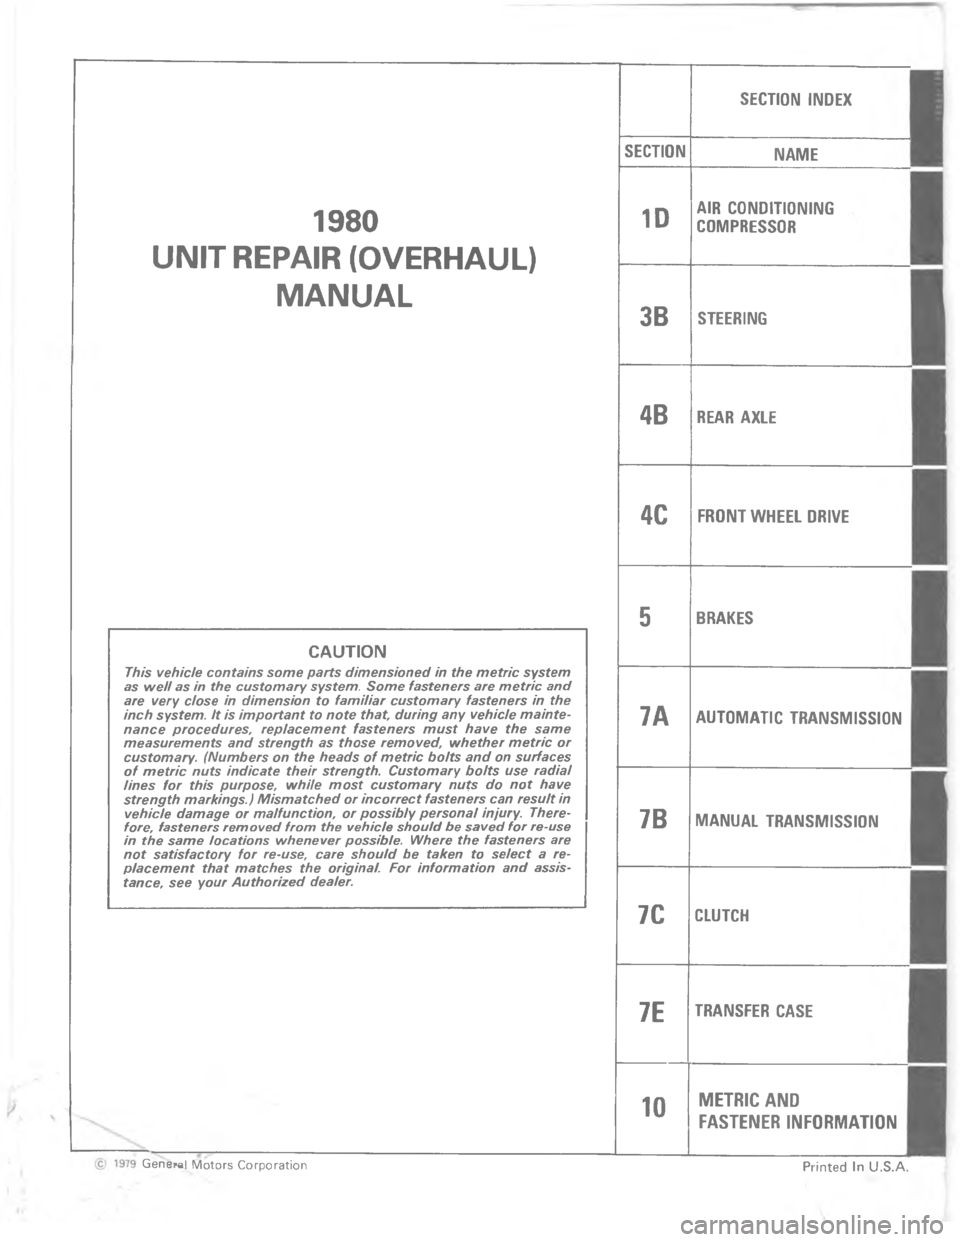 CHEVROLET LIGHT DUTY TRUCK 1980  Repair Everhaul Manual Downloaded from www.Manualslib.com manuals search engine 











	












 
?
?!
@
A
A
A
A	

!

  